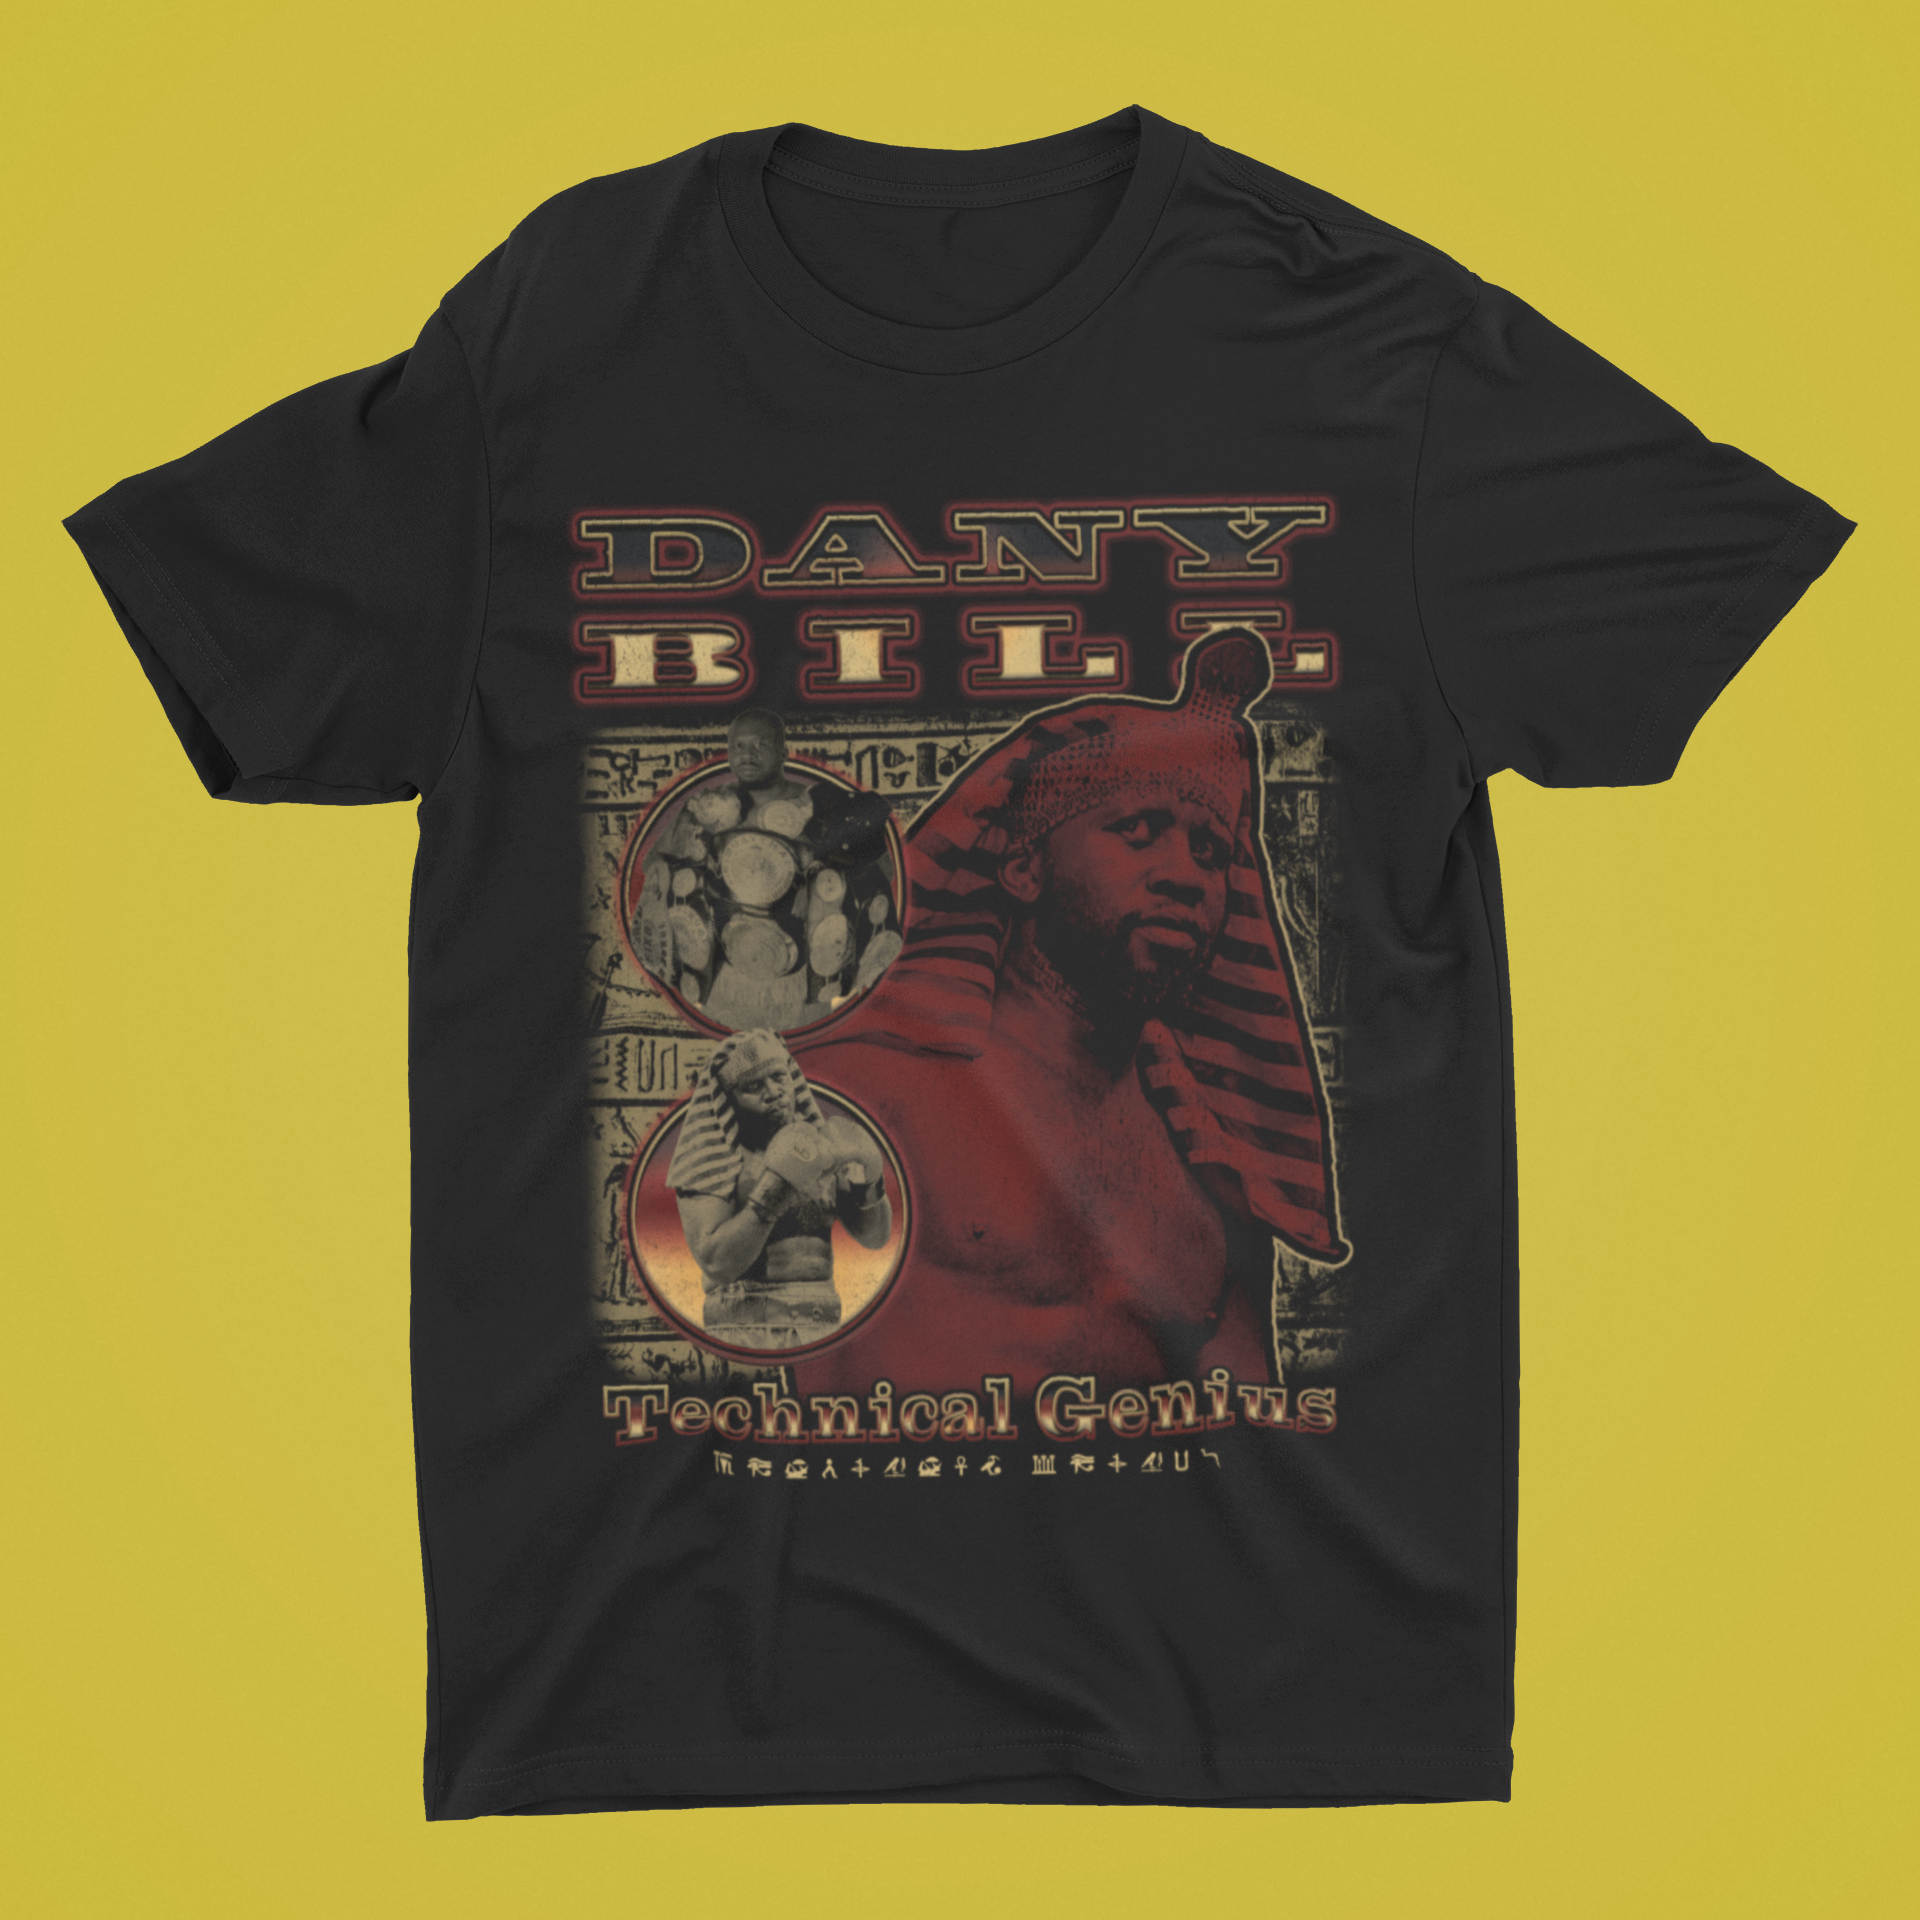 Dany Bill “Technical Genius” Muay Thai T Shirt